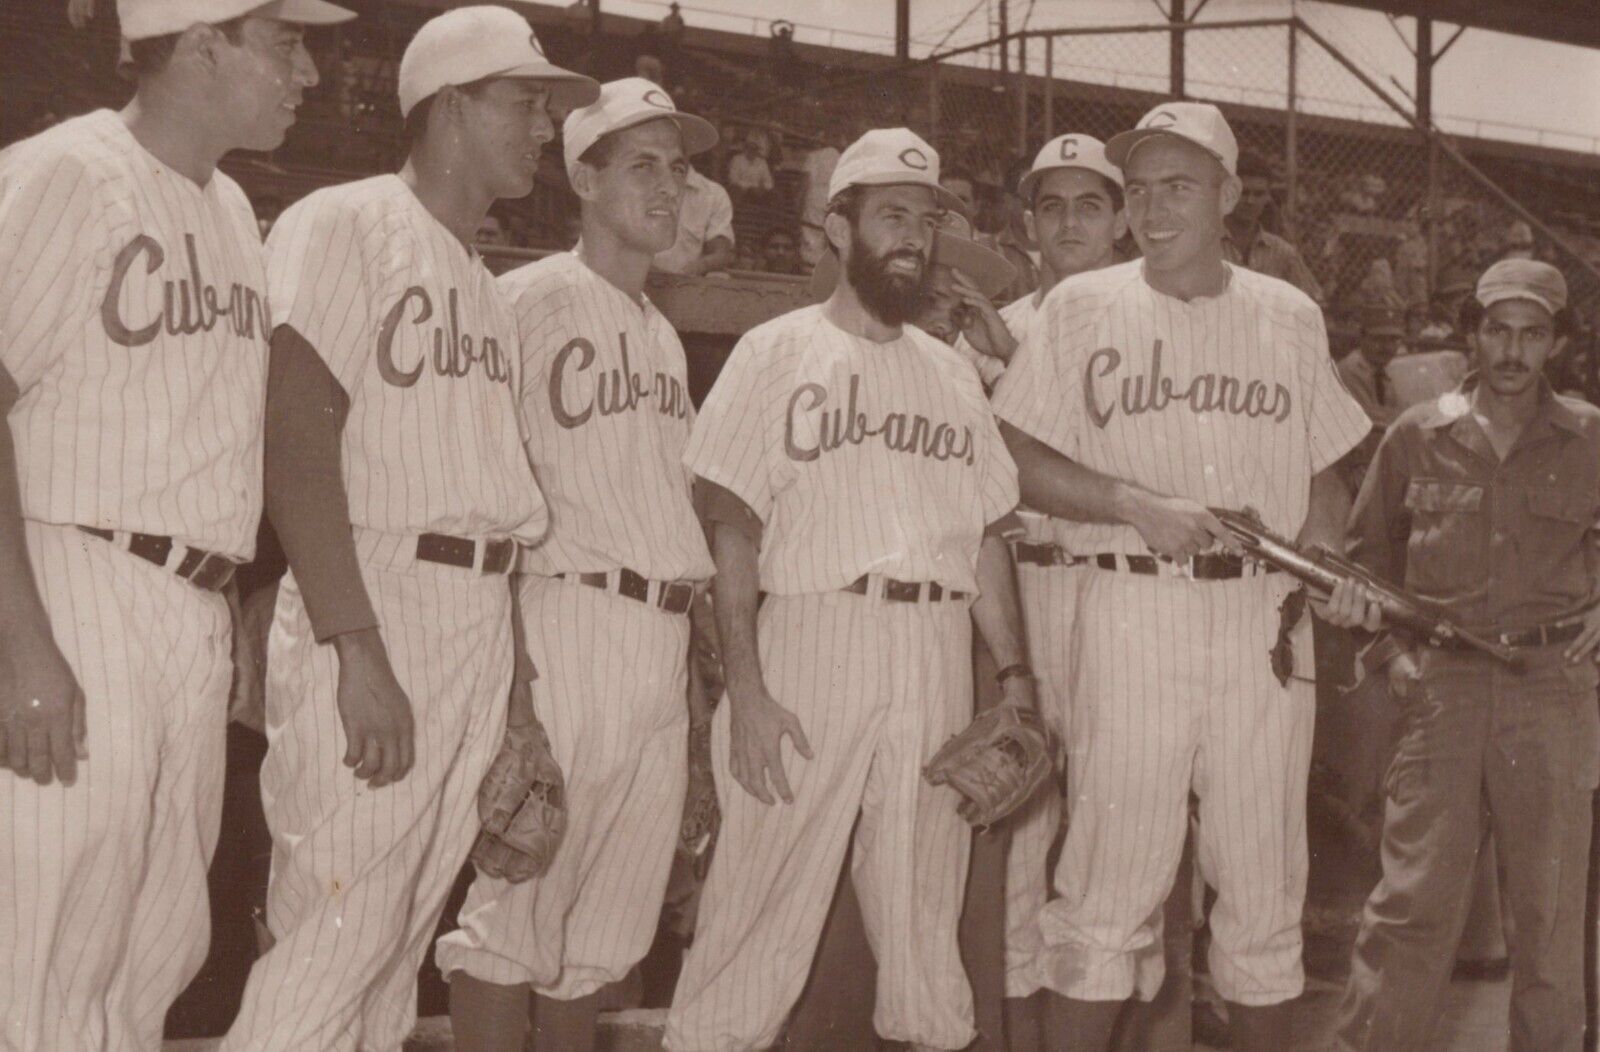 CUBA CUBAN BASEBALL SUGAR KINGS CAMILO CIENFUEGOS from Negative 1970s Photo 141